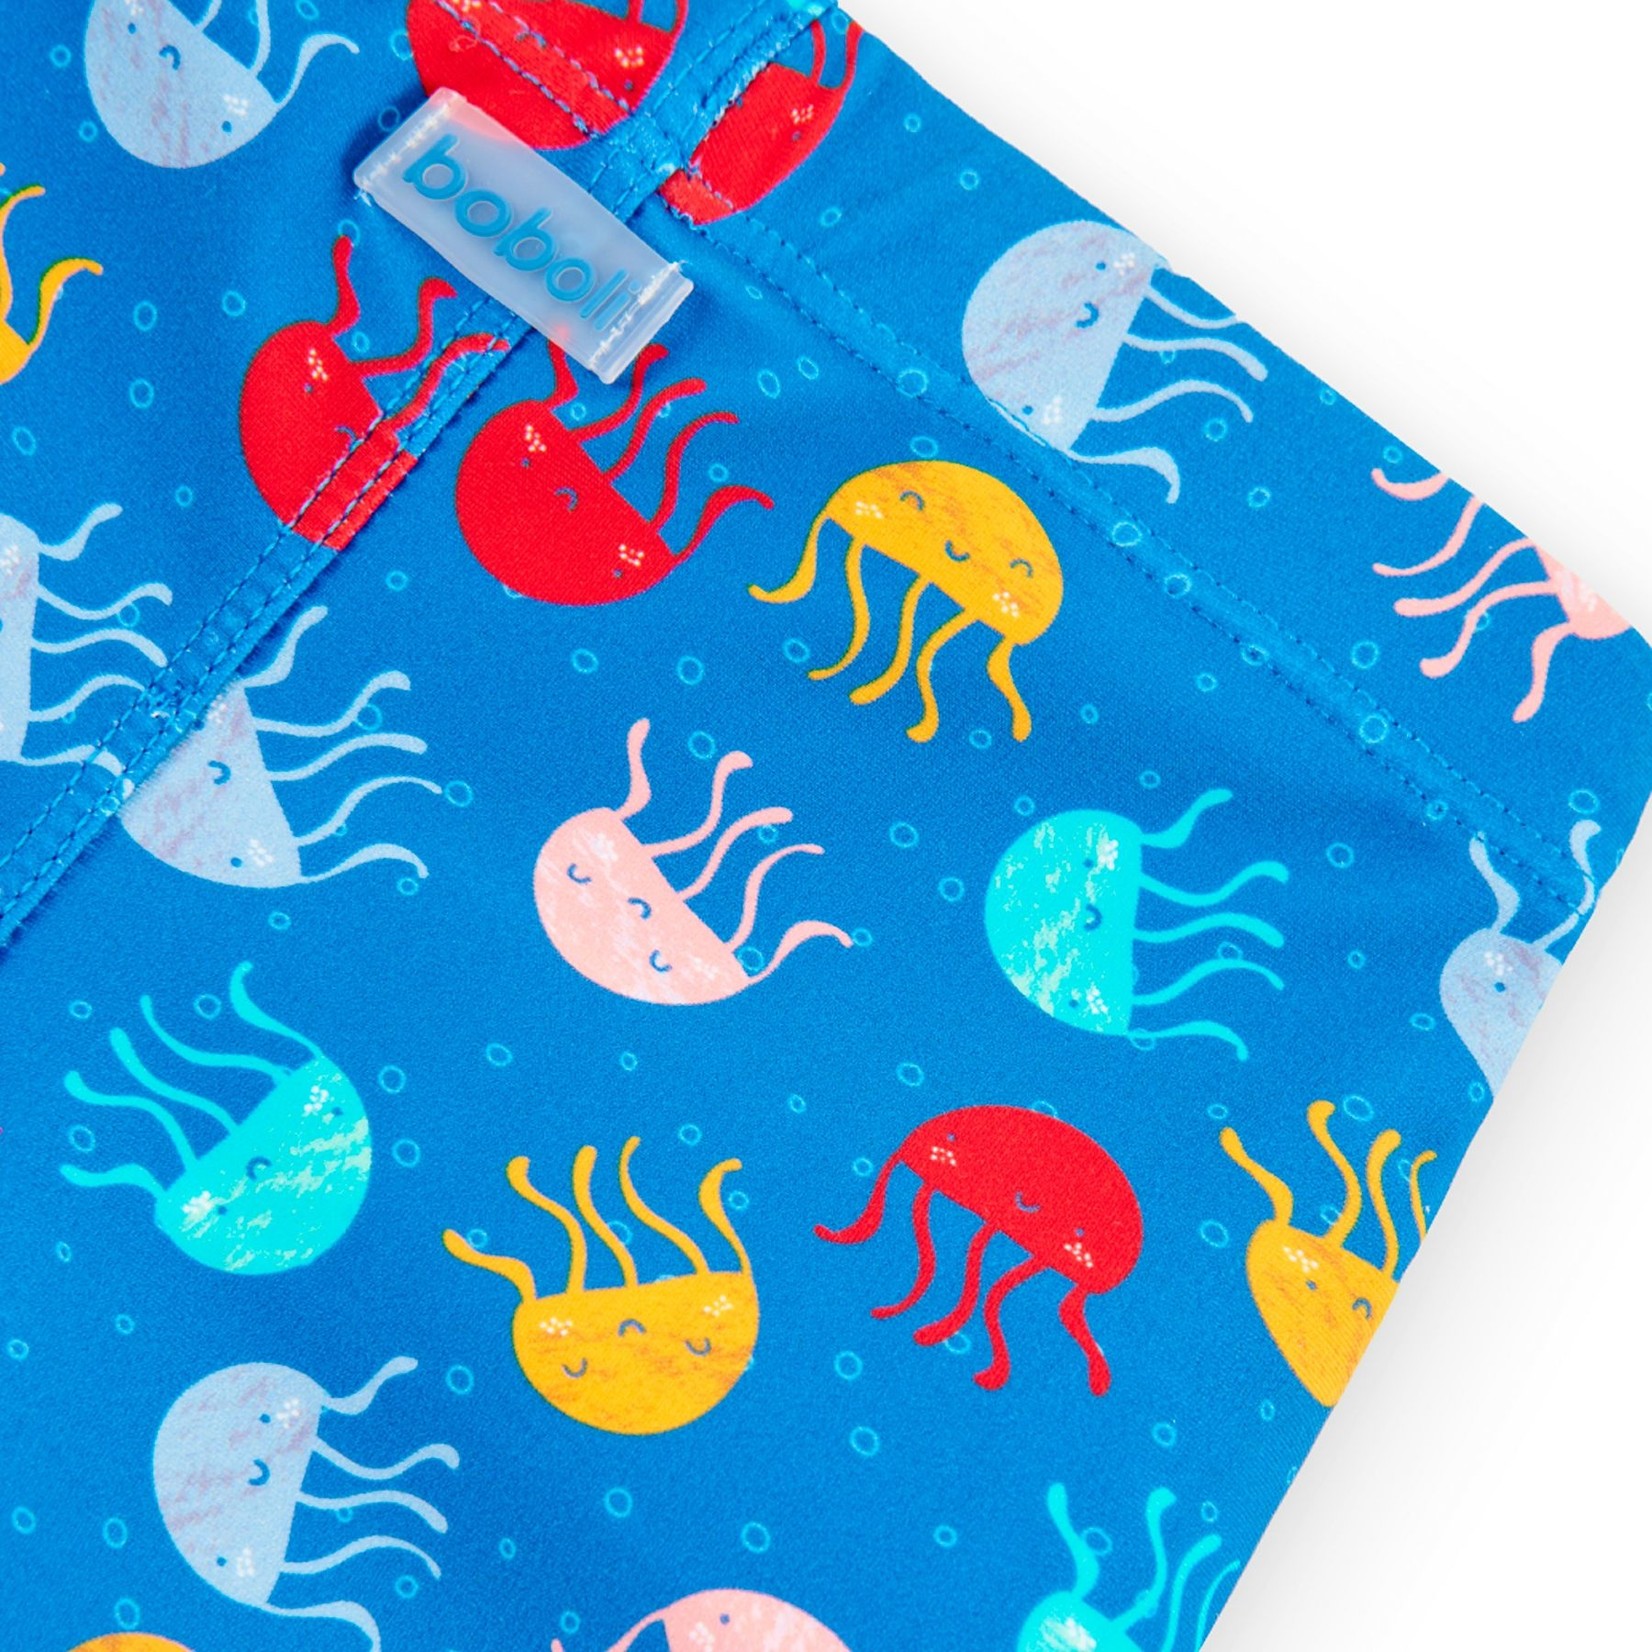 Boboli BOBOLI - Lycra Swim Shorts with a Jellyfish Print